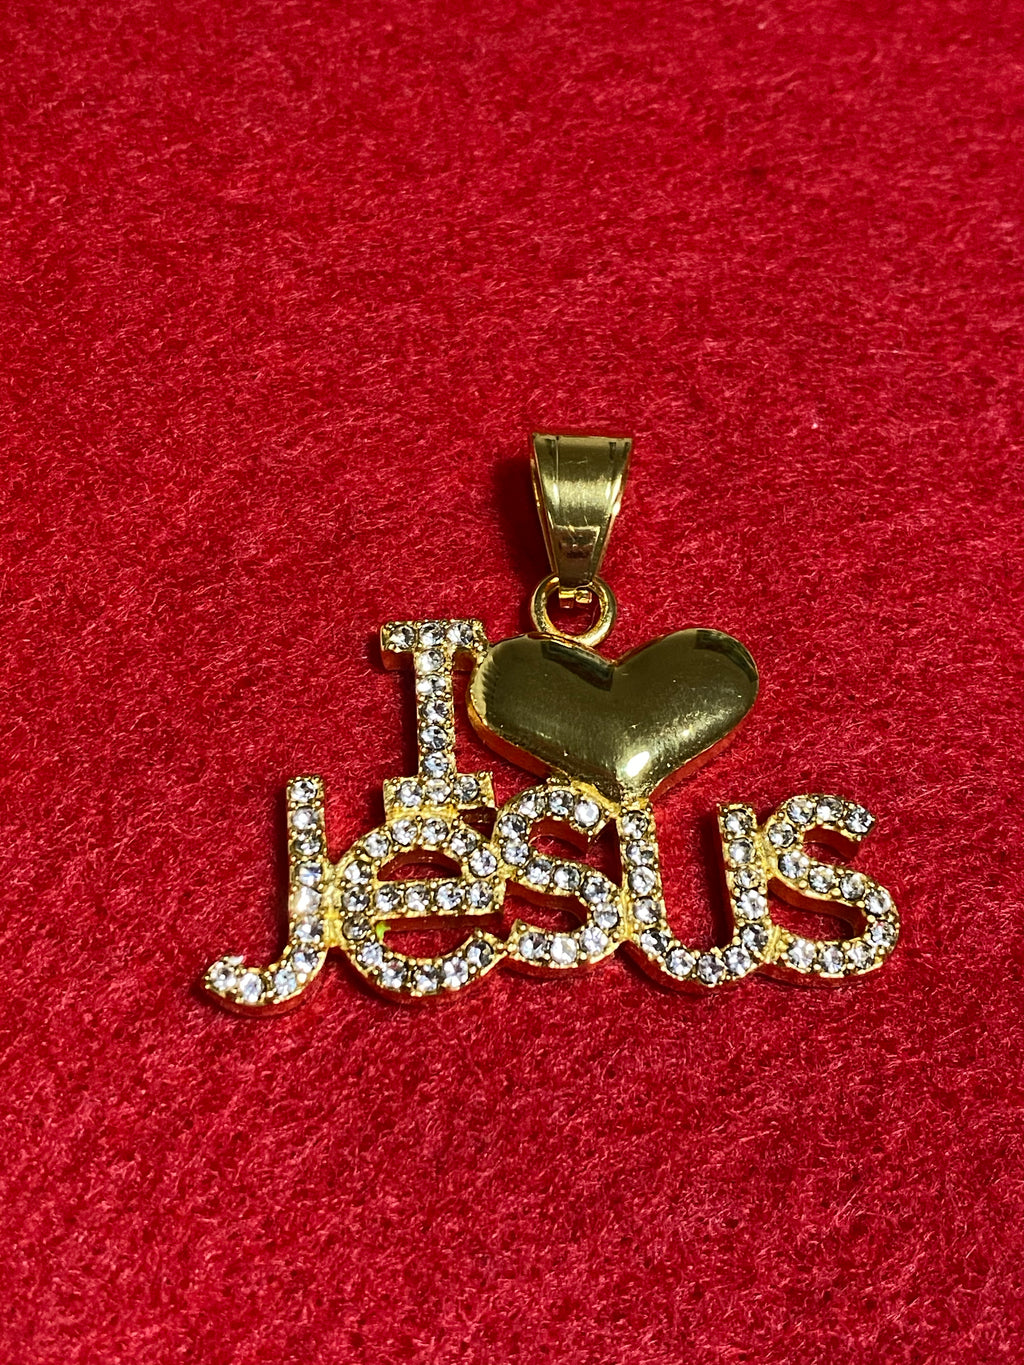 I love Jesus pendant and chain